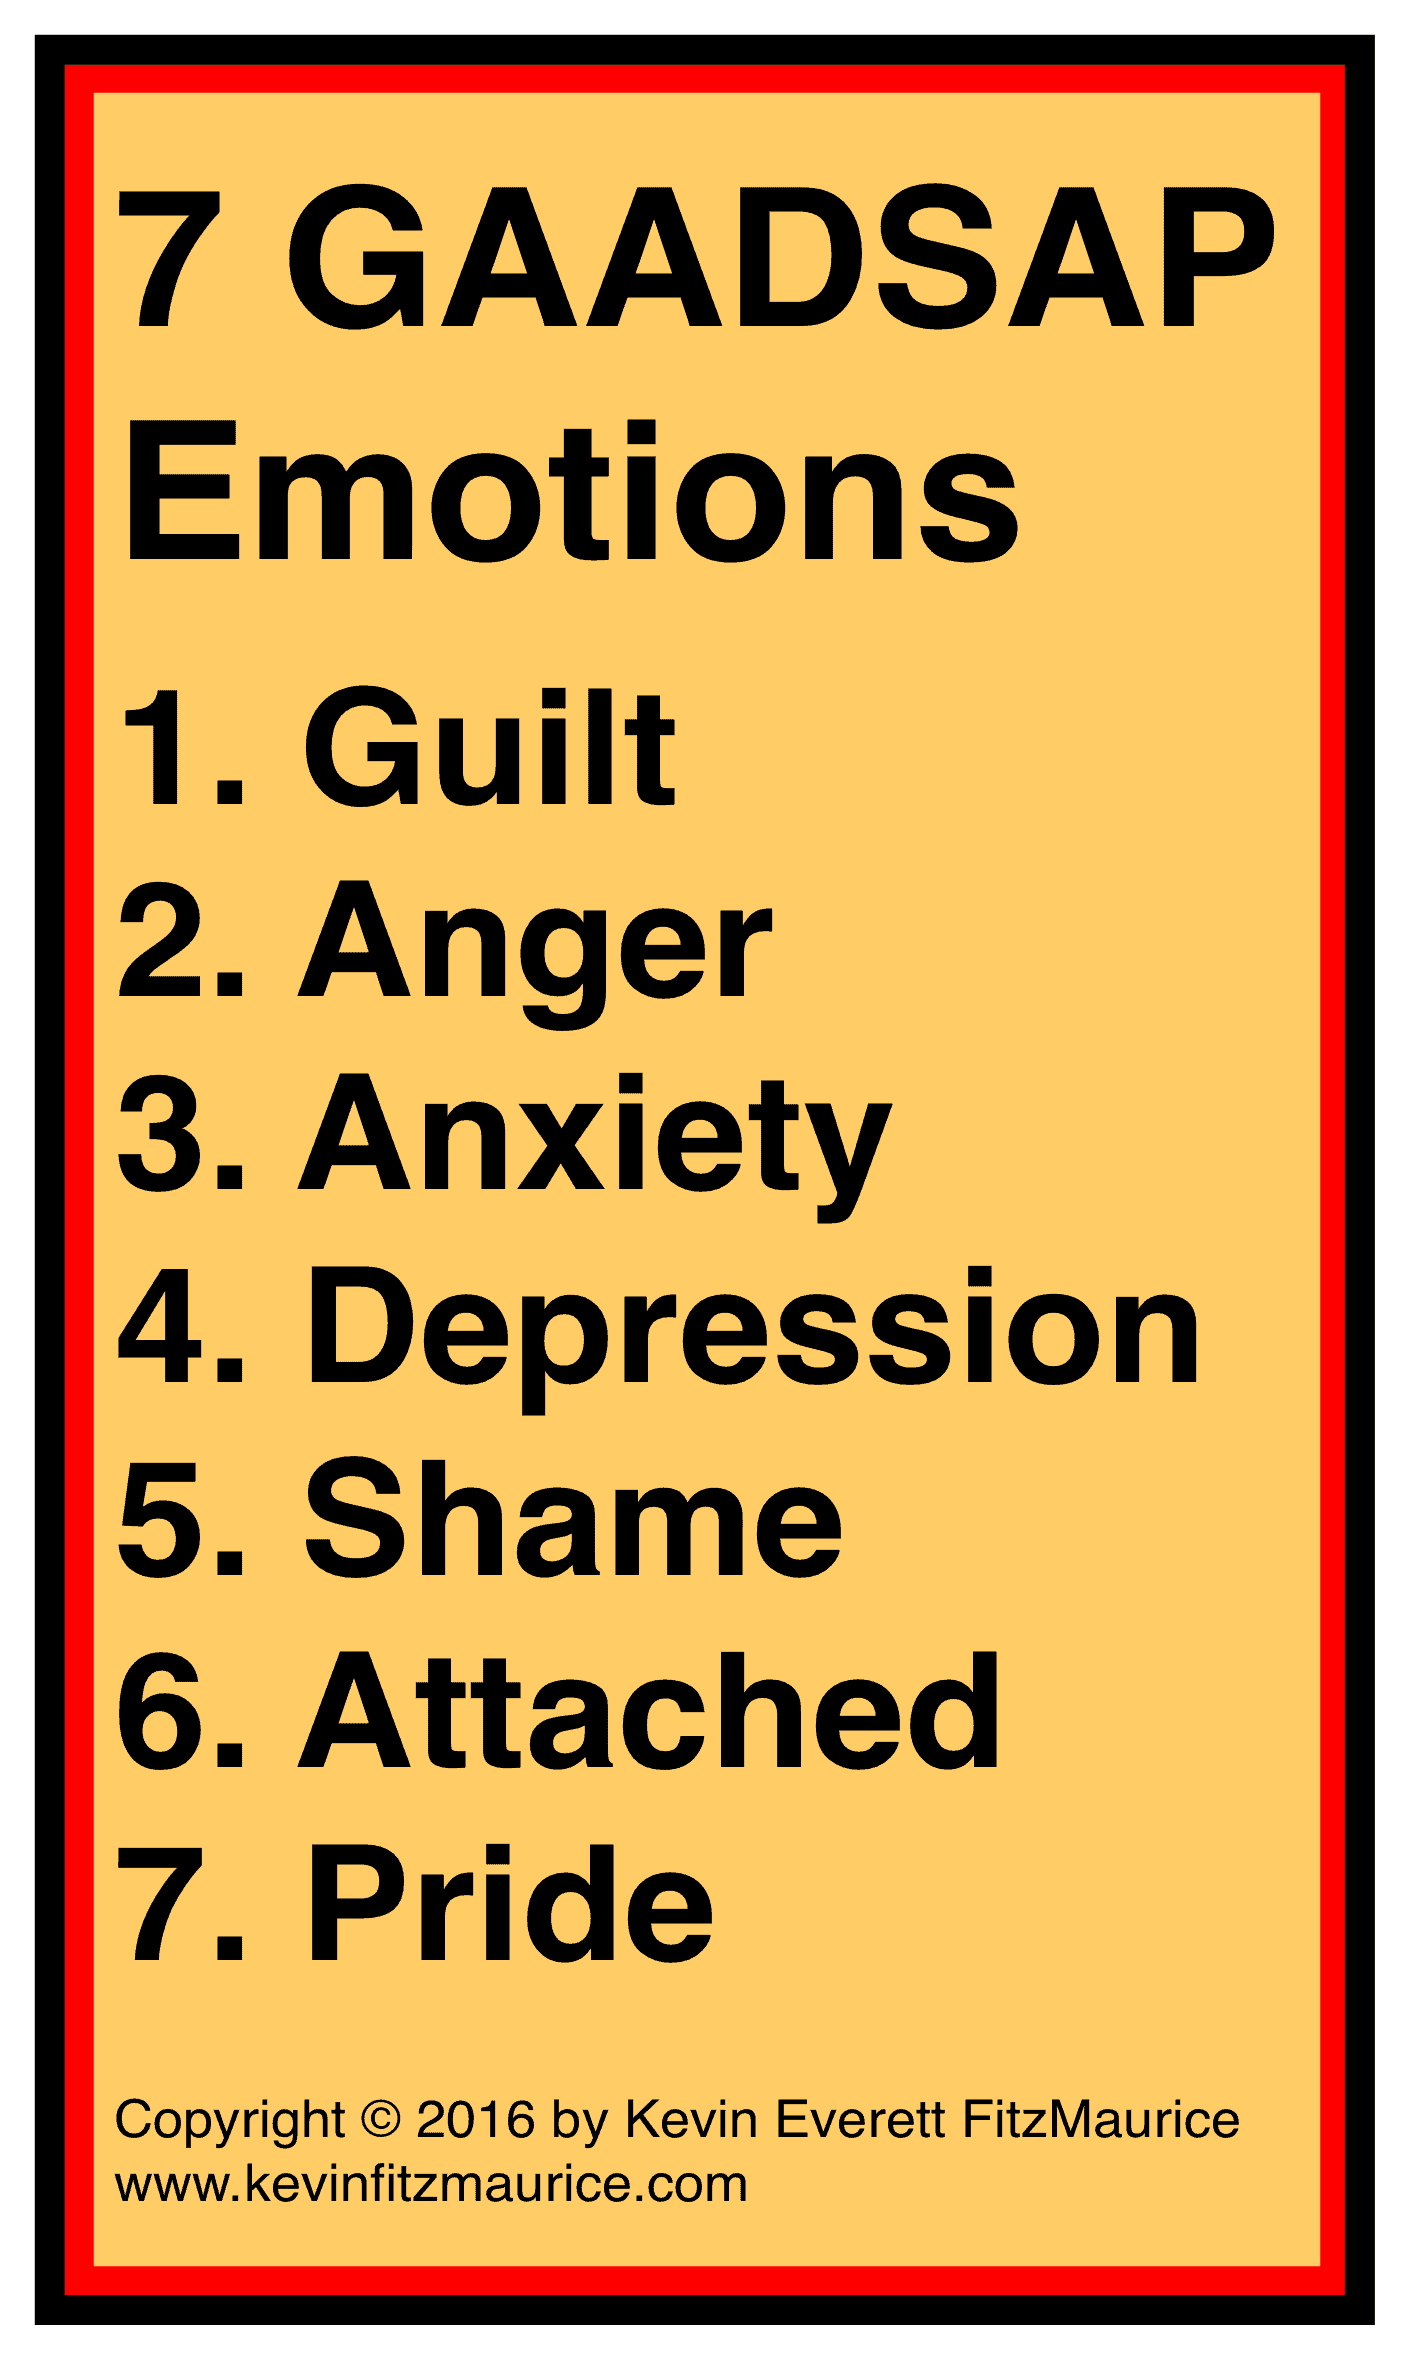 GAADSAP emotions